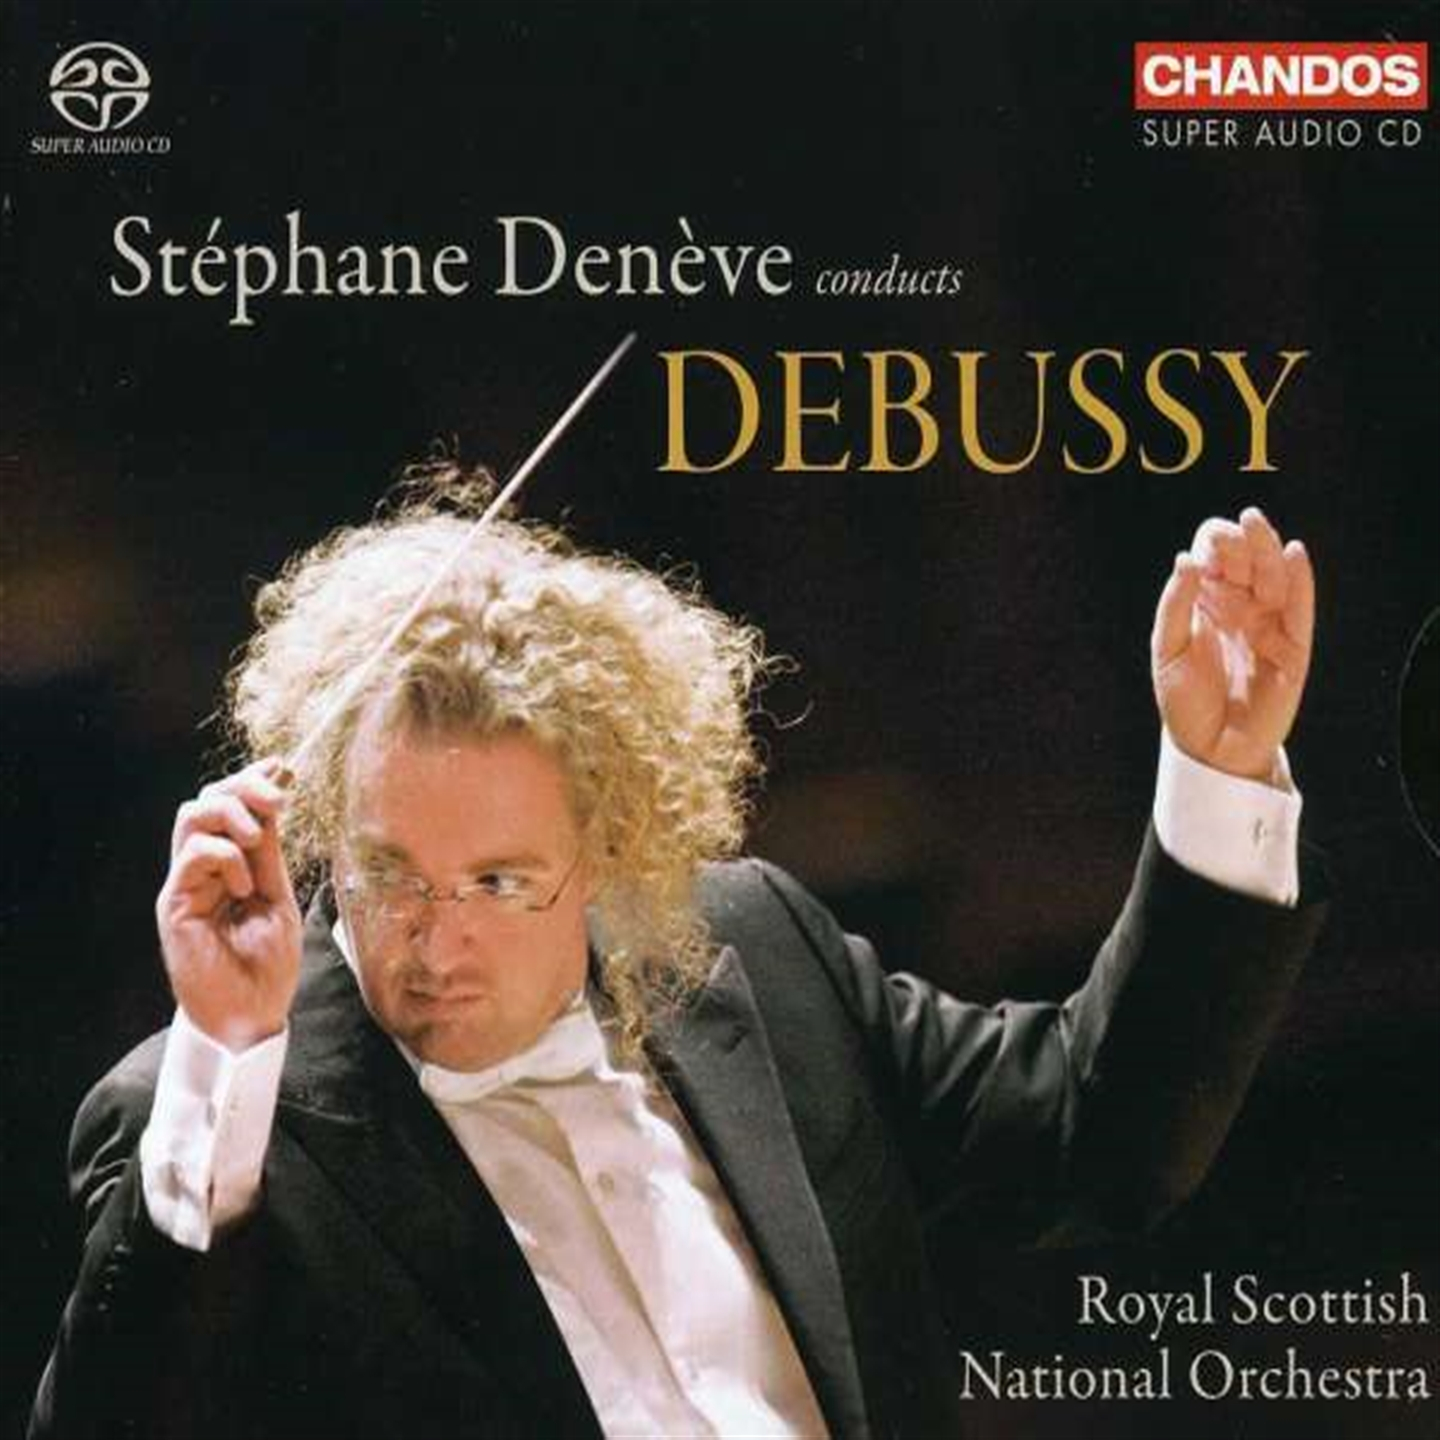 Royal Scottish National Orchestra, Stephane Deneve - Debussy: Orchestral Works - Foto 1 di 1